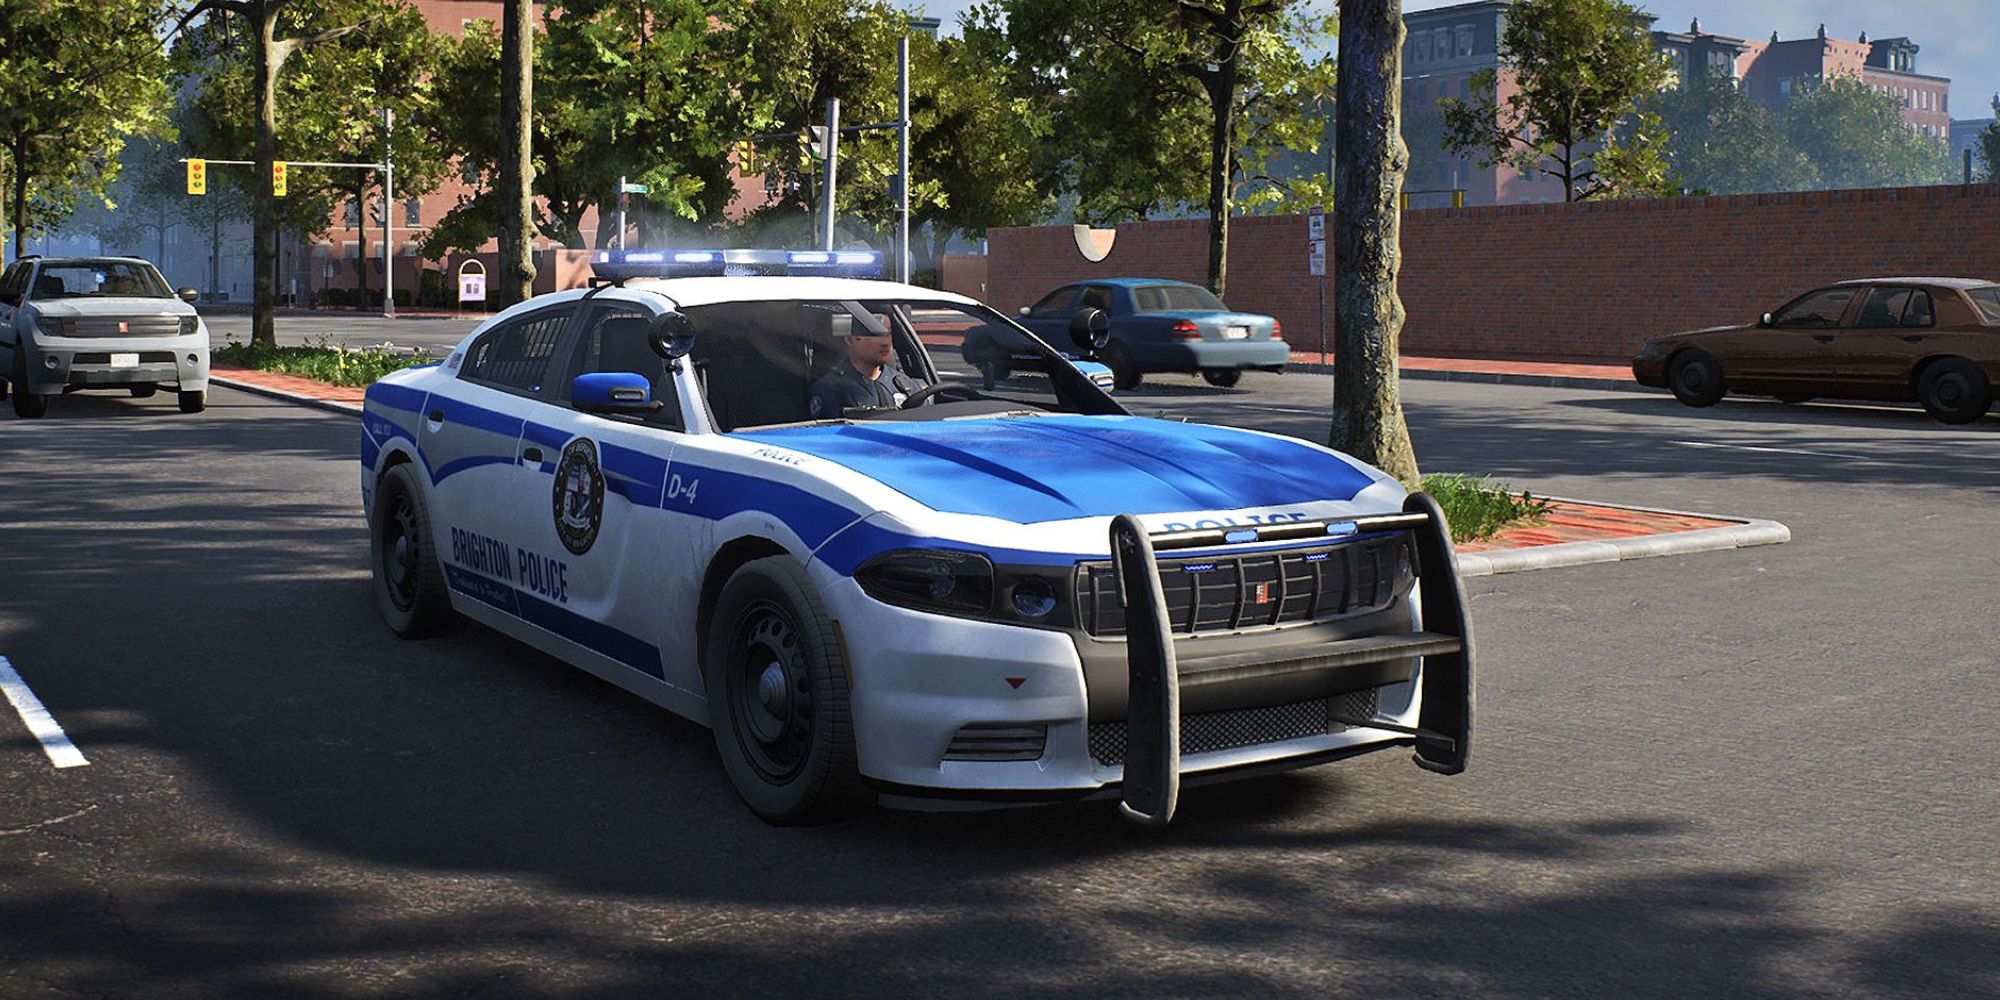 Police Simulator: Patrol Officers squad car